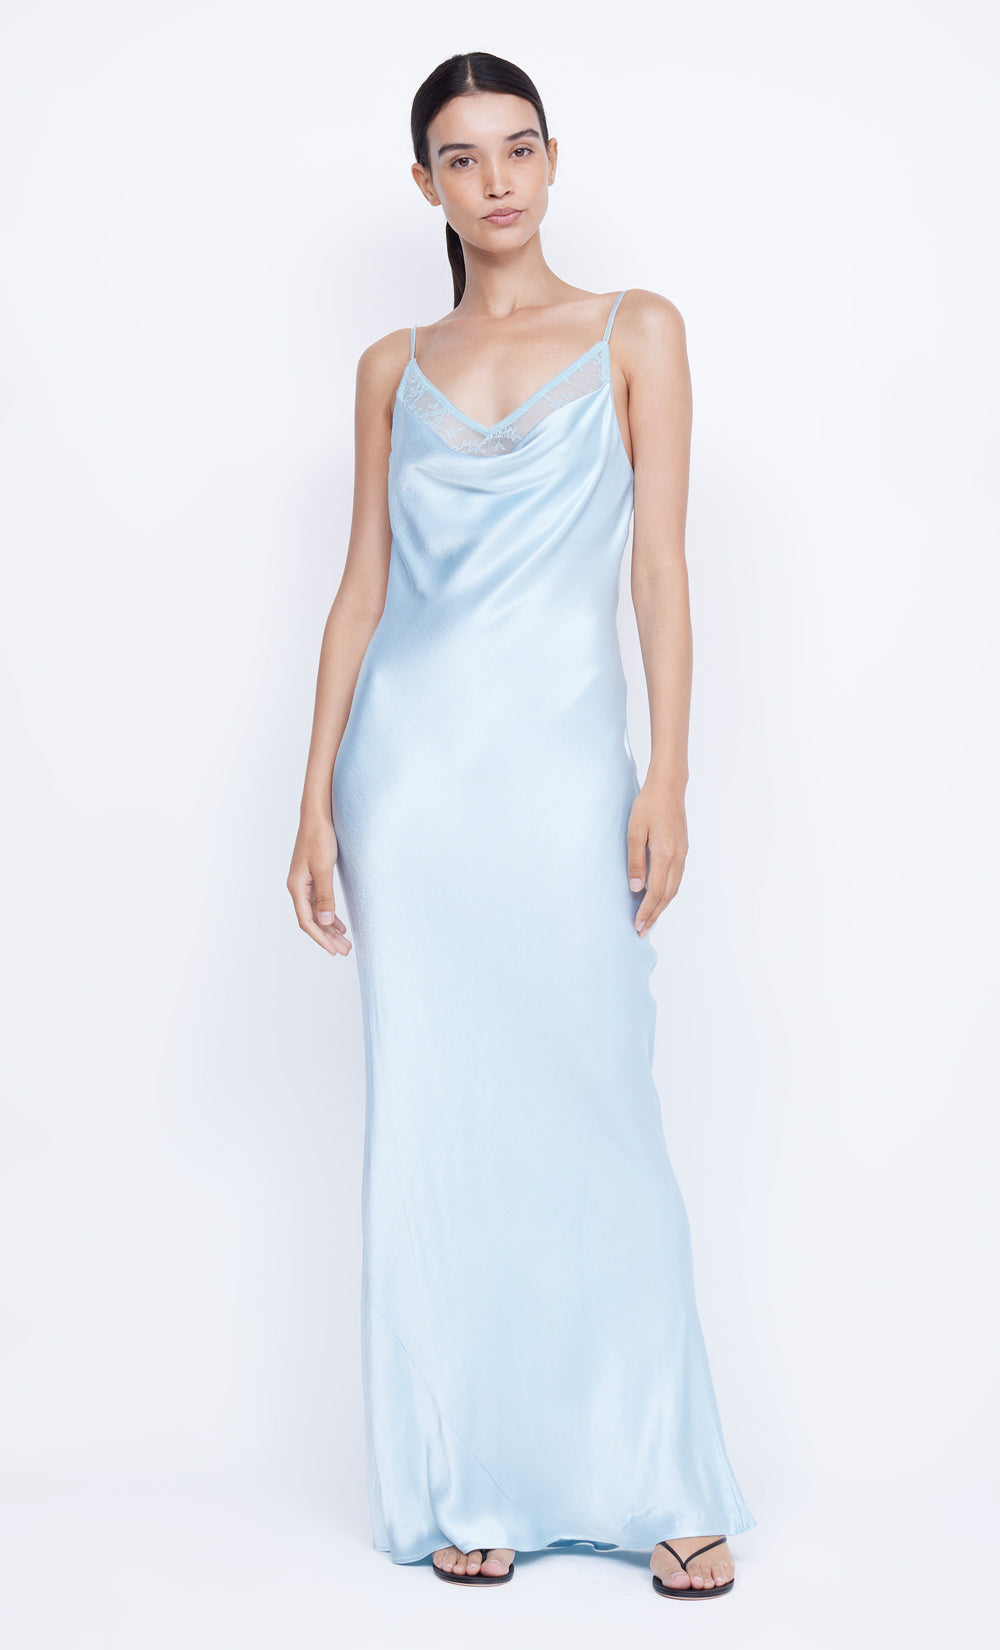 Arabella Backless Dress - Dolphin Blue